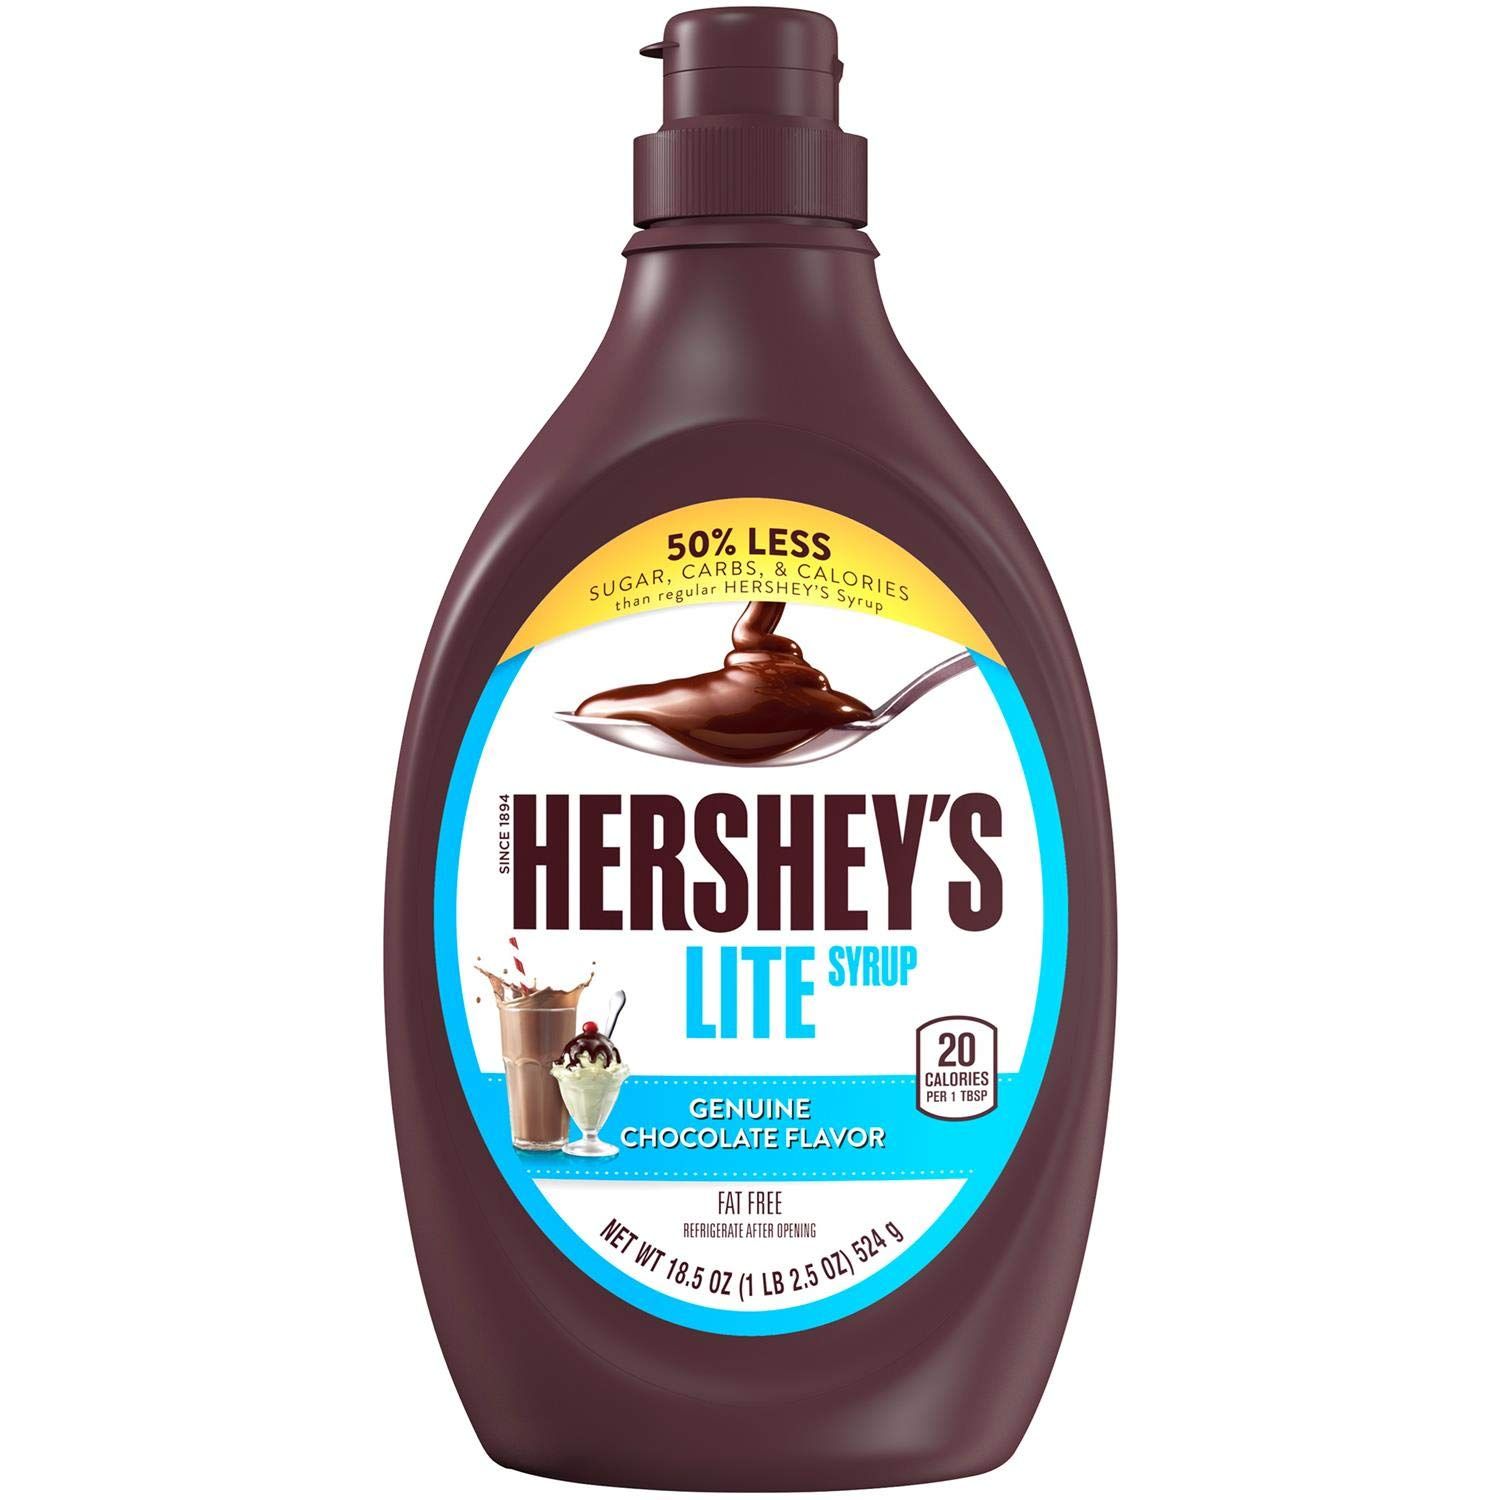 Hershey's Syrup Lite Genuine Chocolate Flavor Image